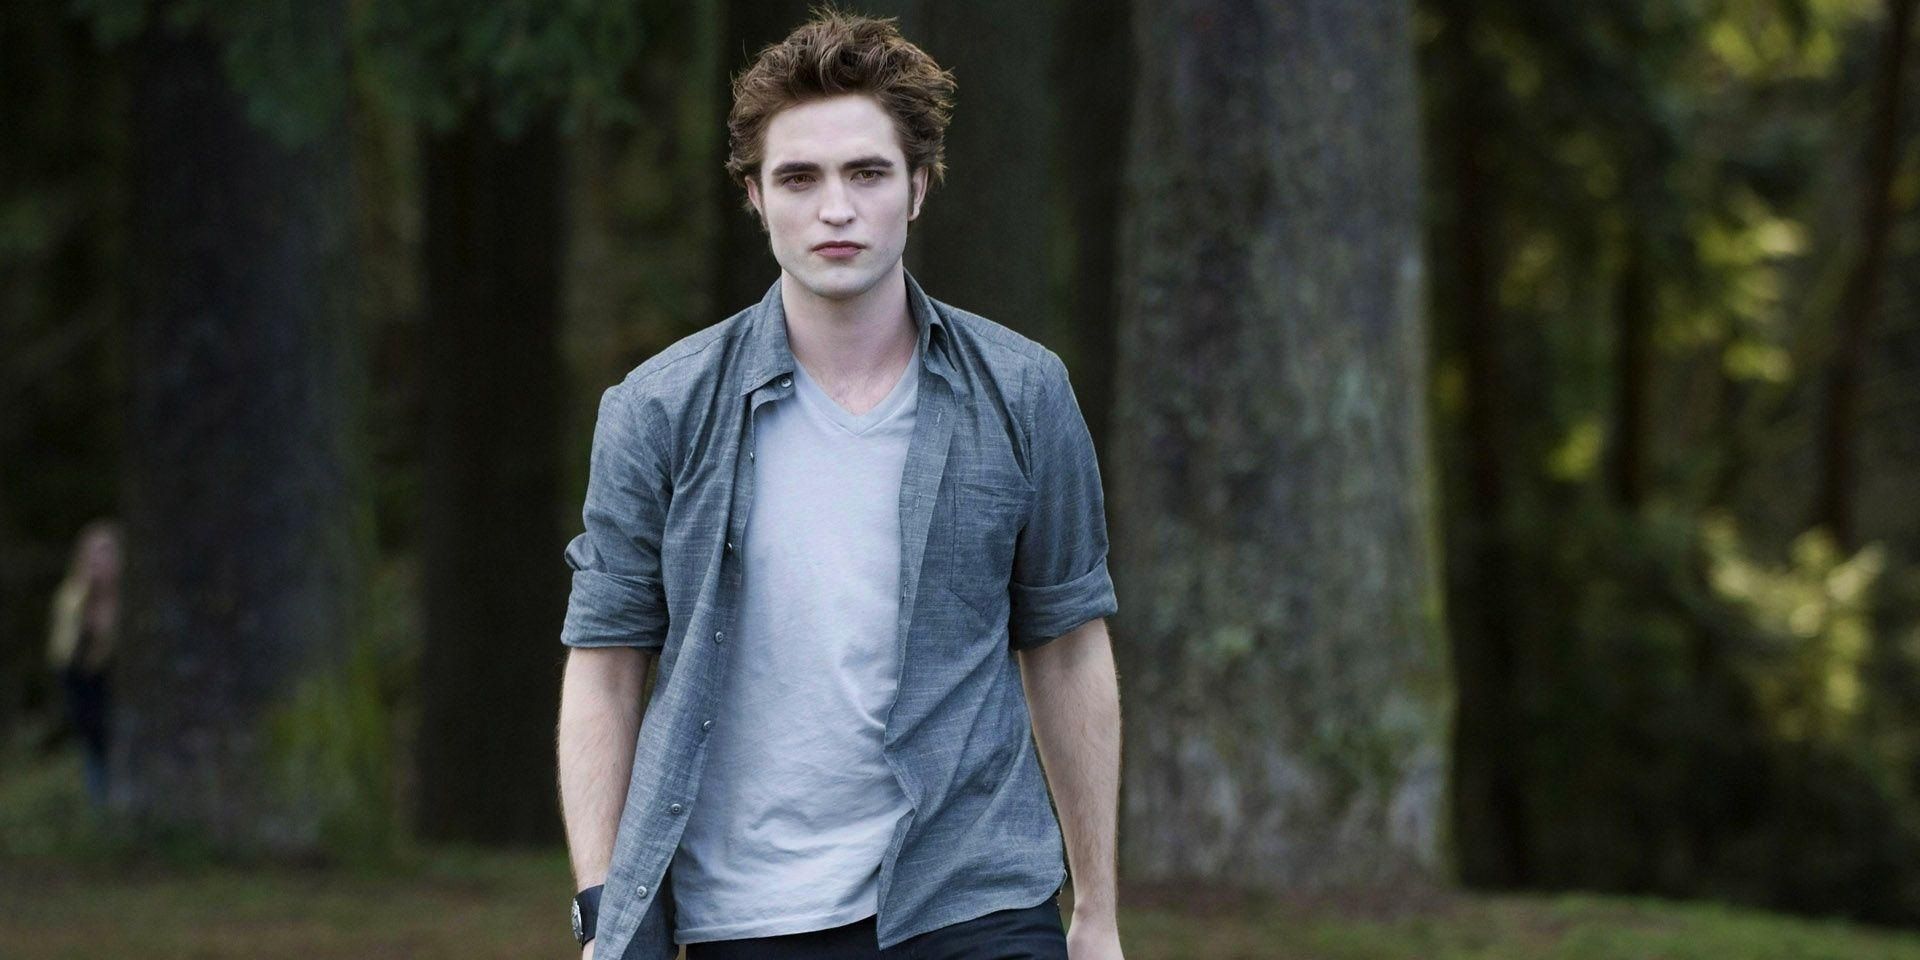 Robert Pattinson as Edward walking in the woods in Twilight